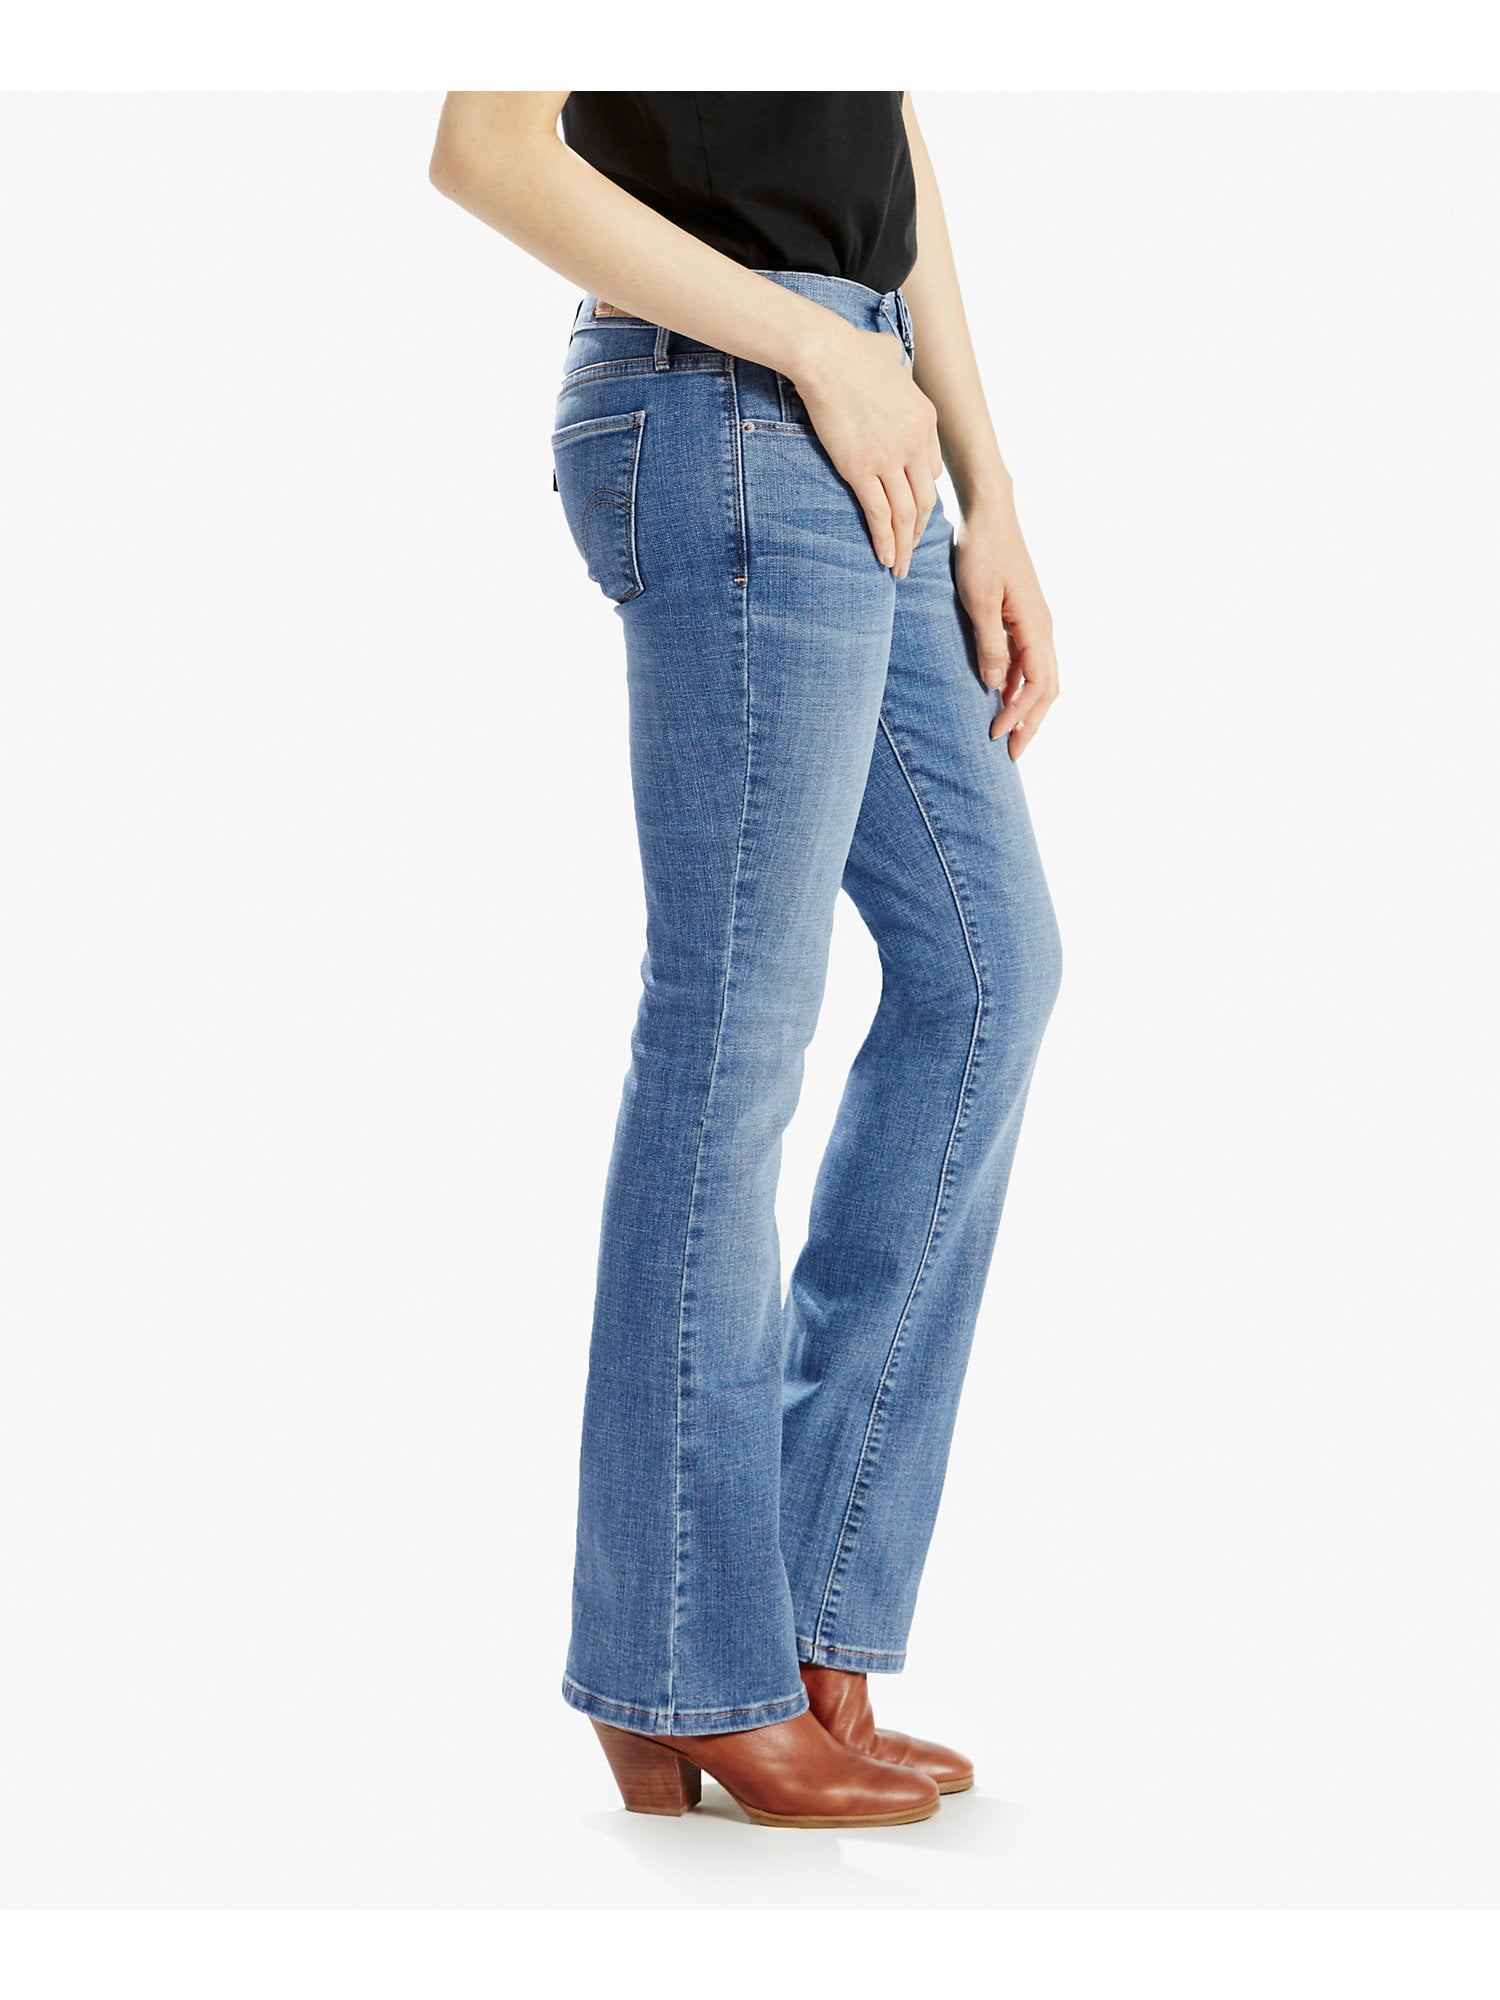 levis jeans 515 bootcut womens